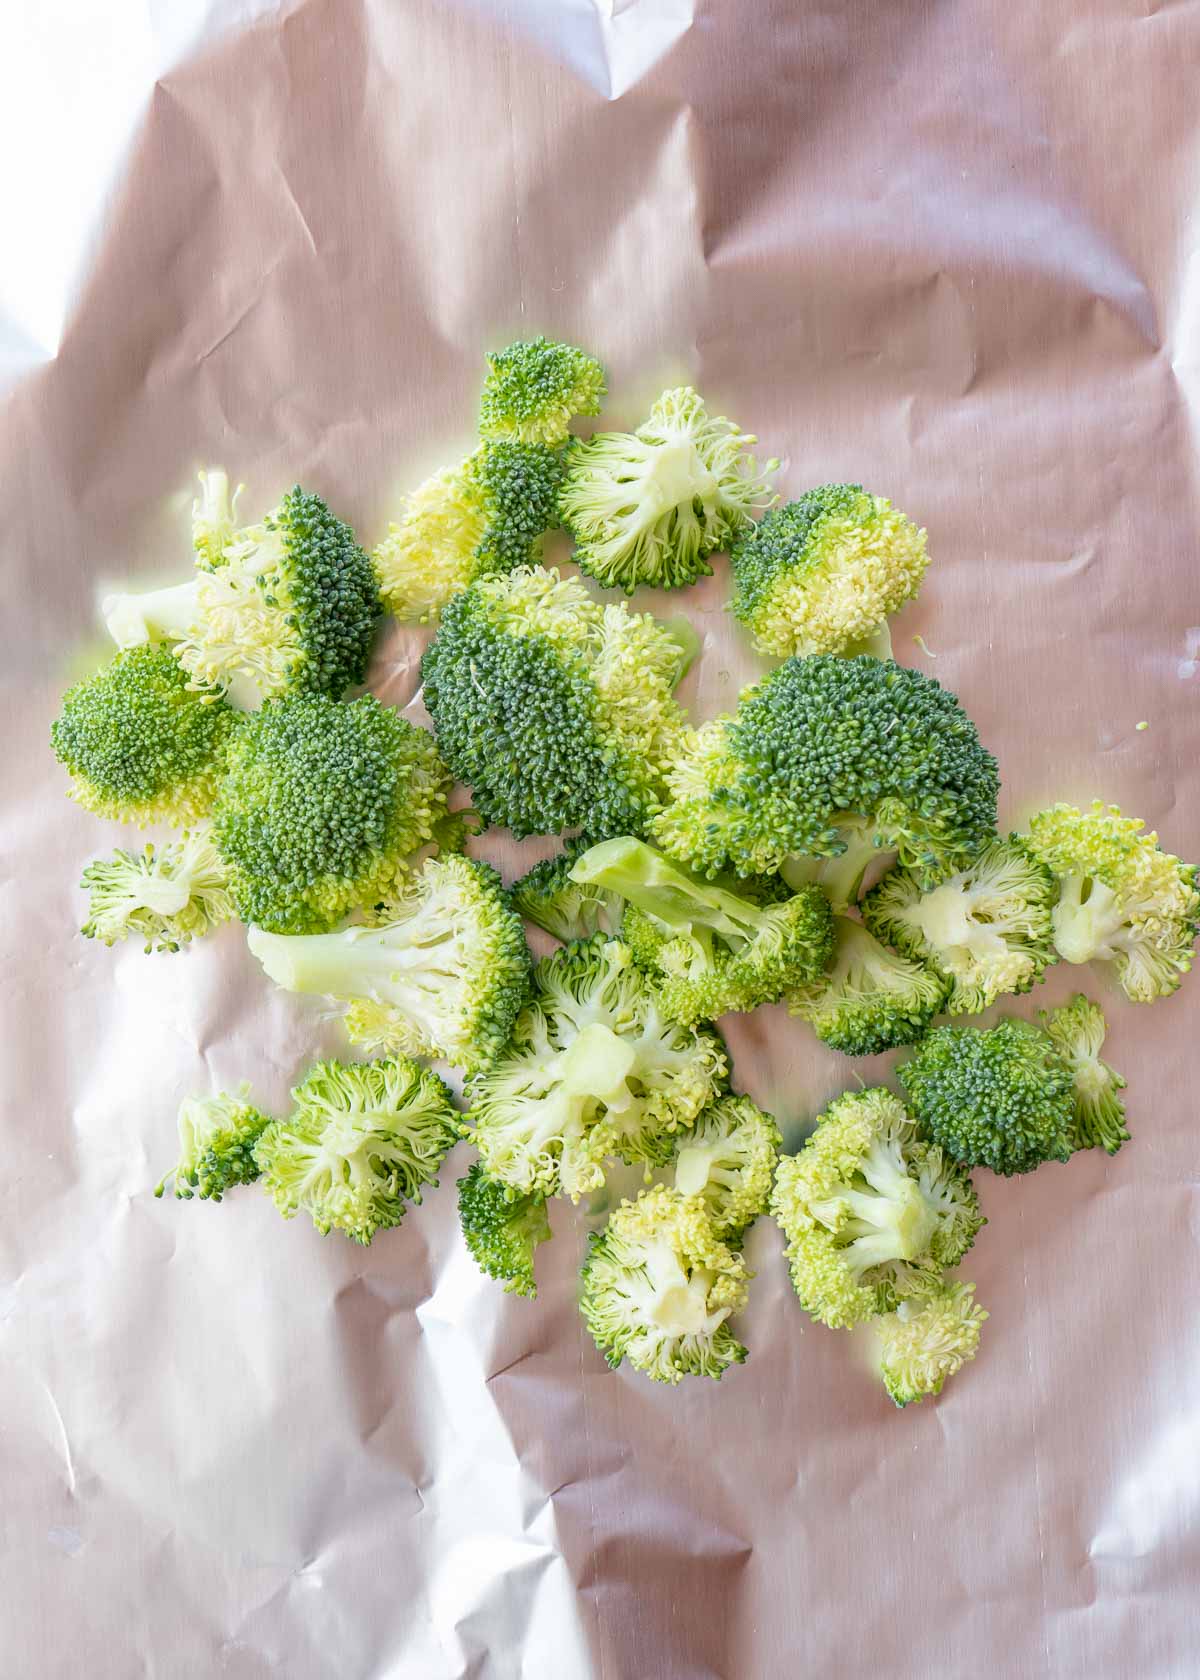 broccoli on foil